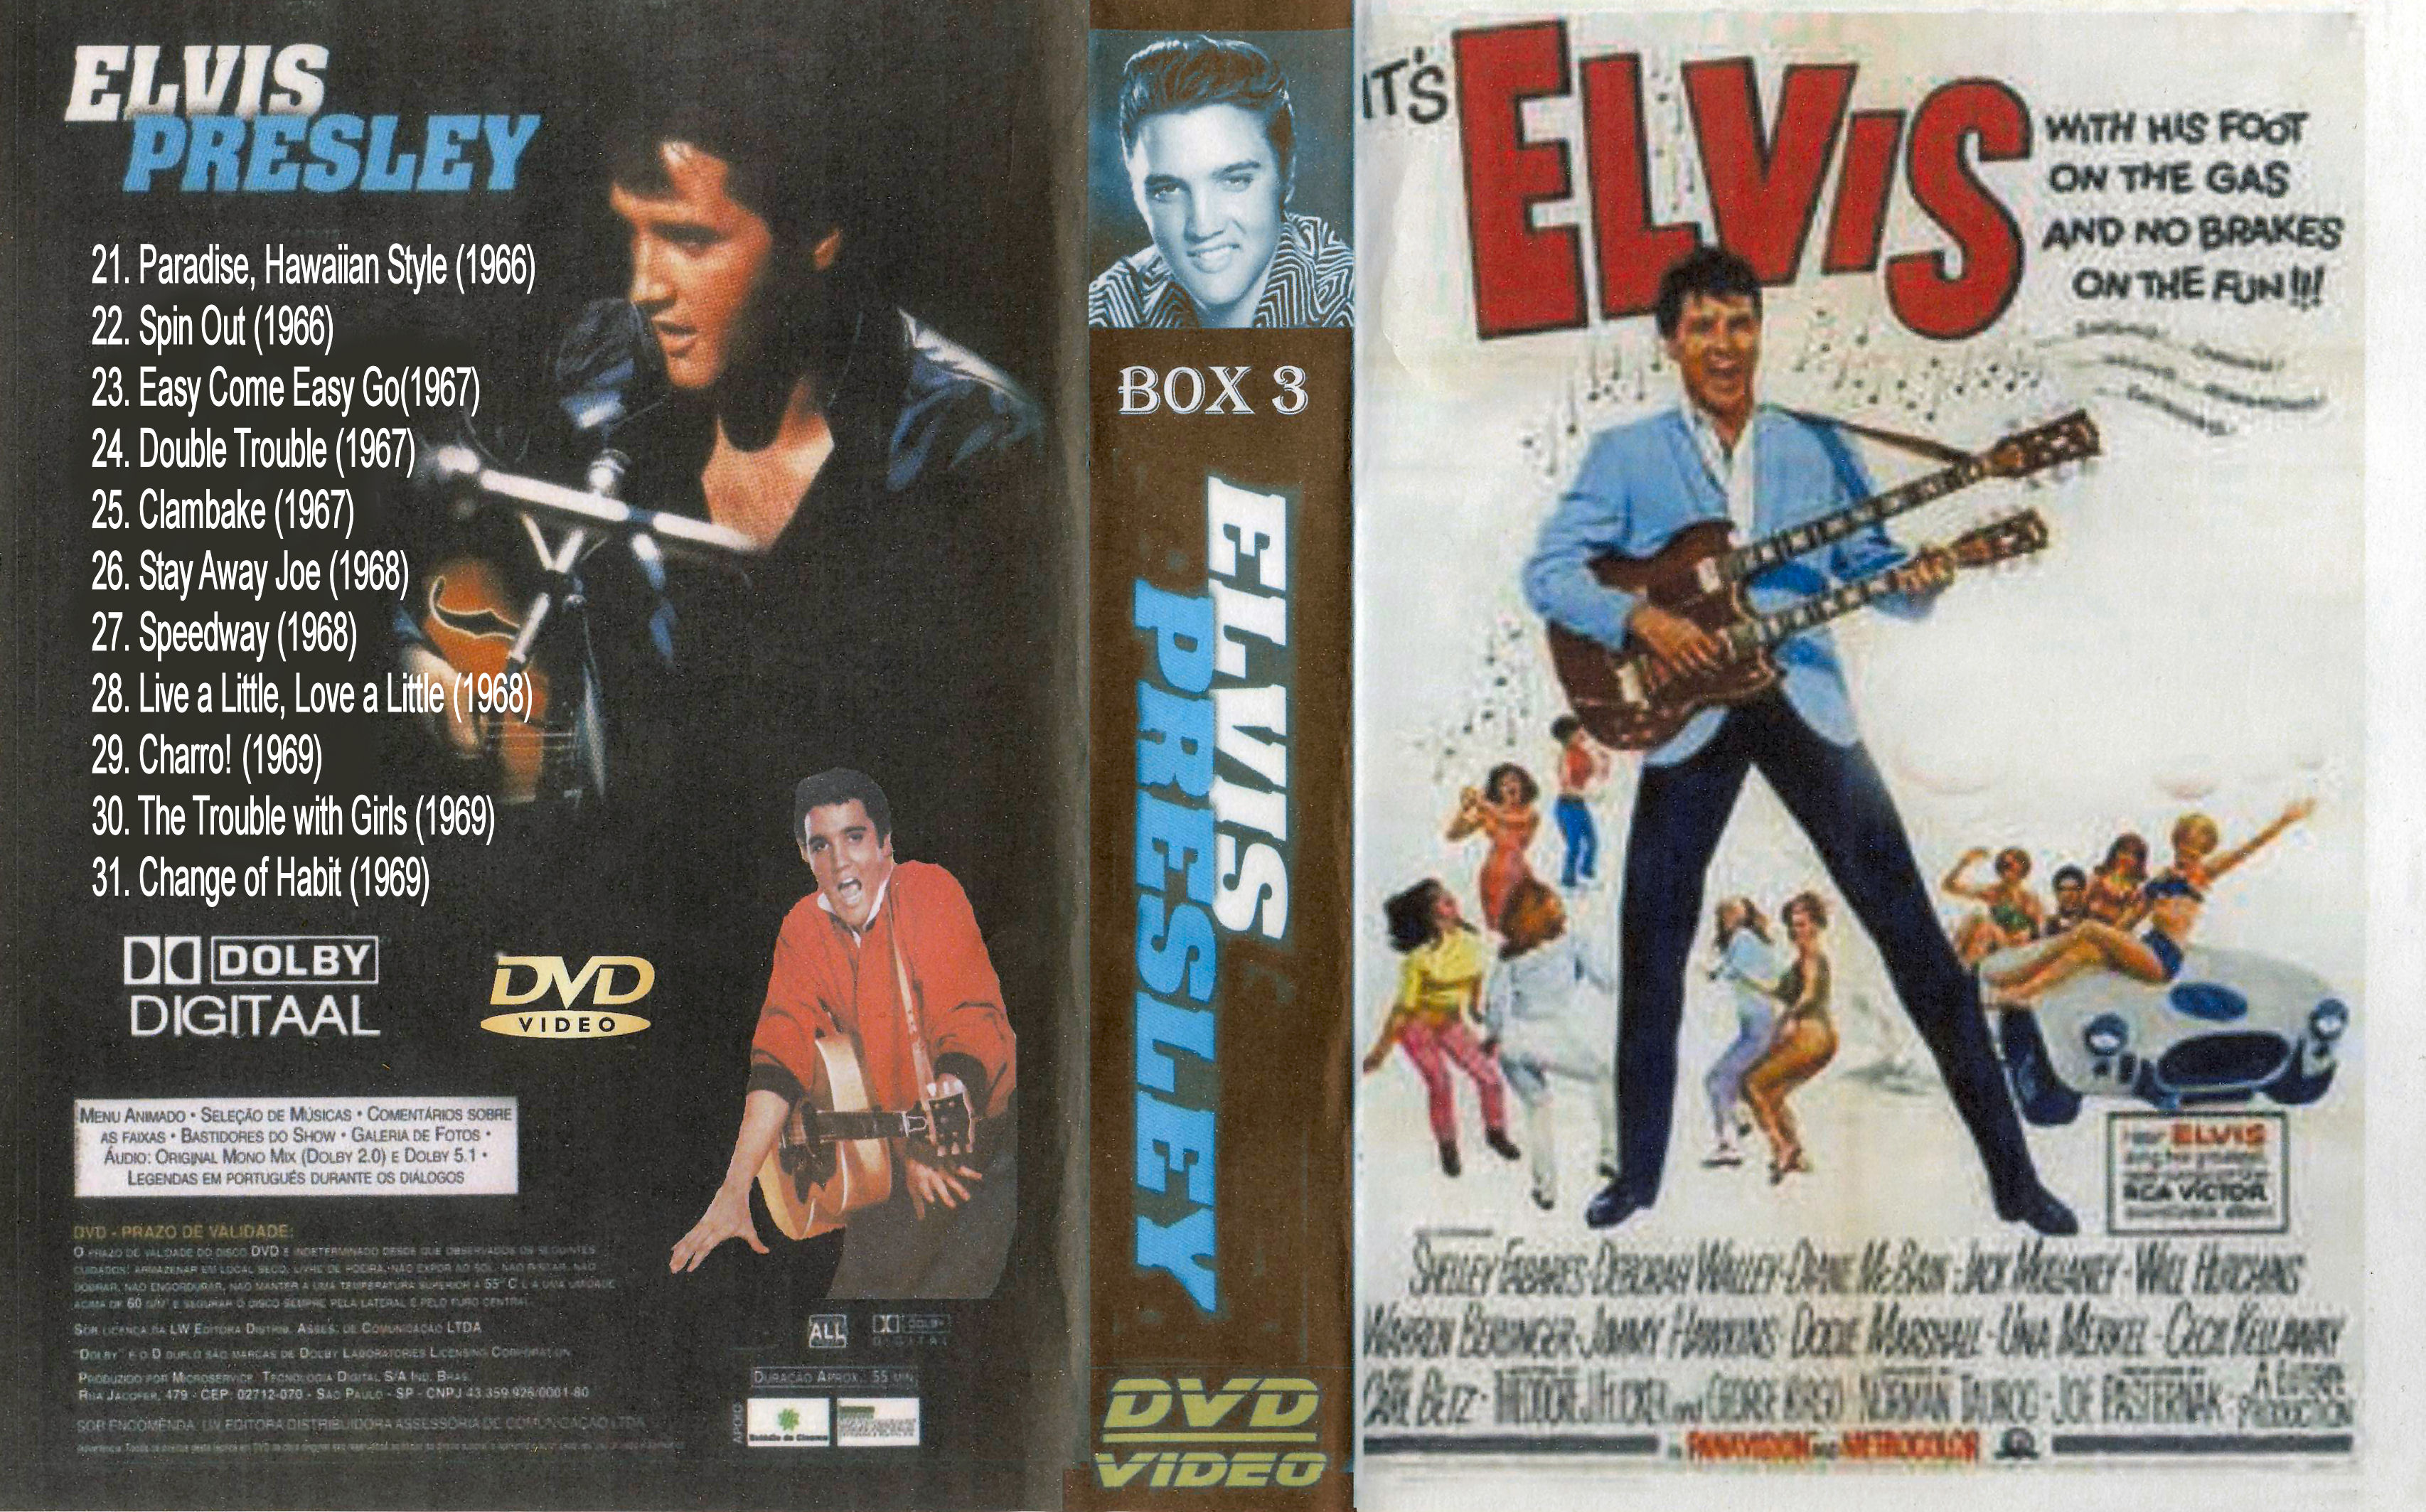 Elvis Presley Collectie ( 22. Spin Out (1966) DvD 22 van 31